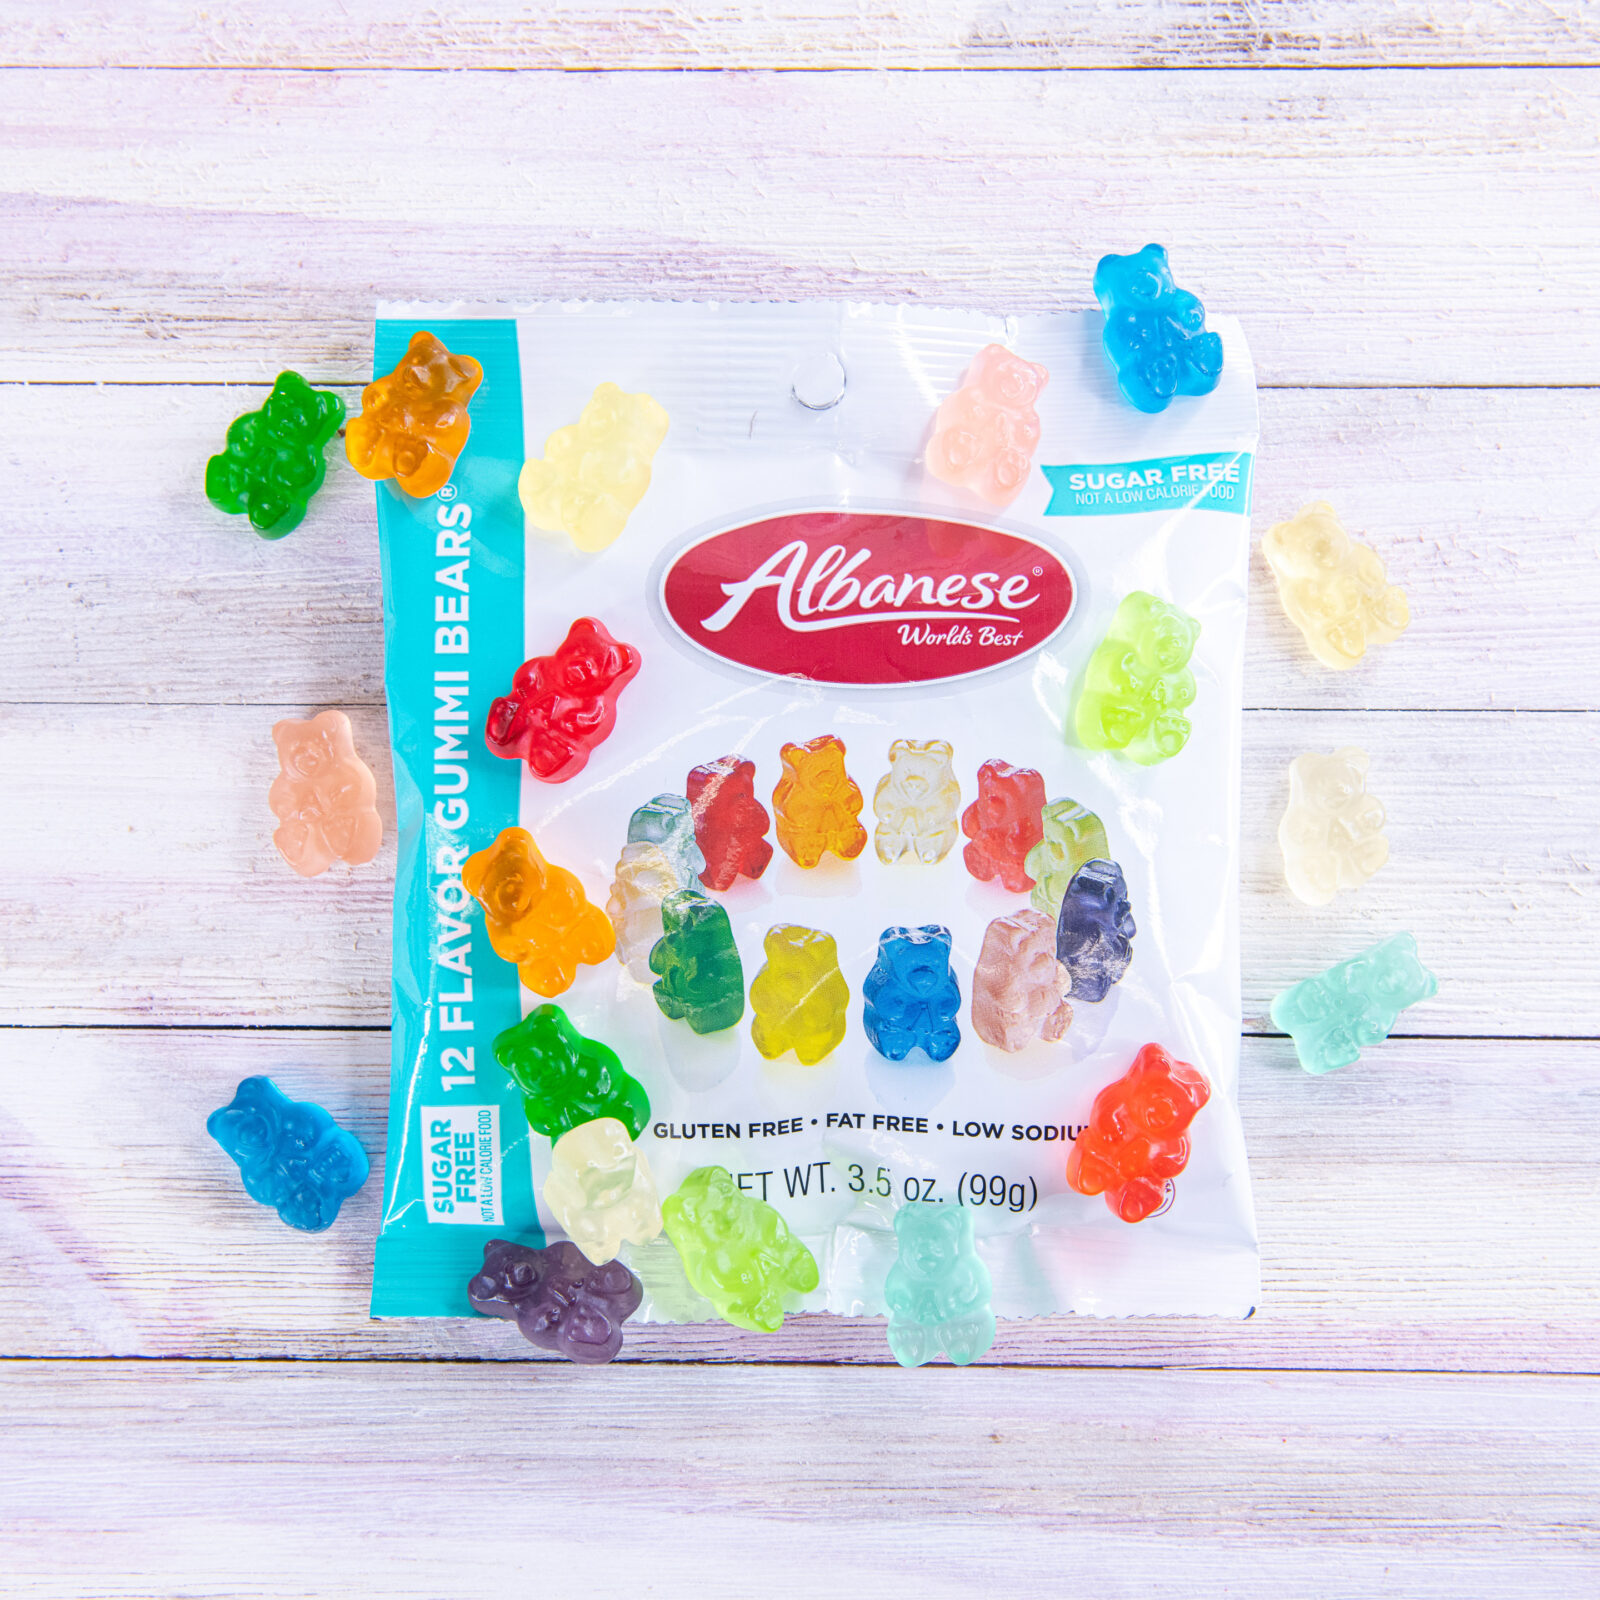 12 Flavor Gummi Bears®